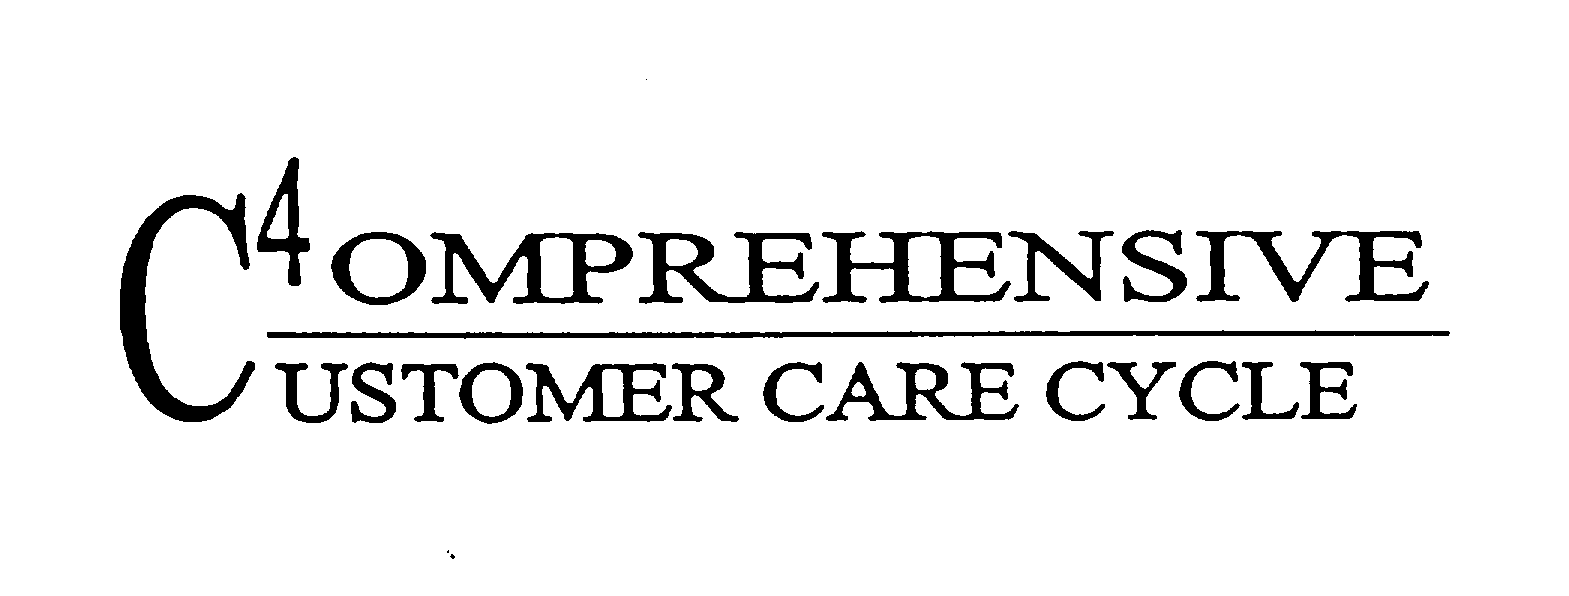 Trademark Logo C4 COMPREHENSIVE CUSTOMER CARE CYCLE